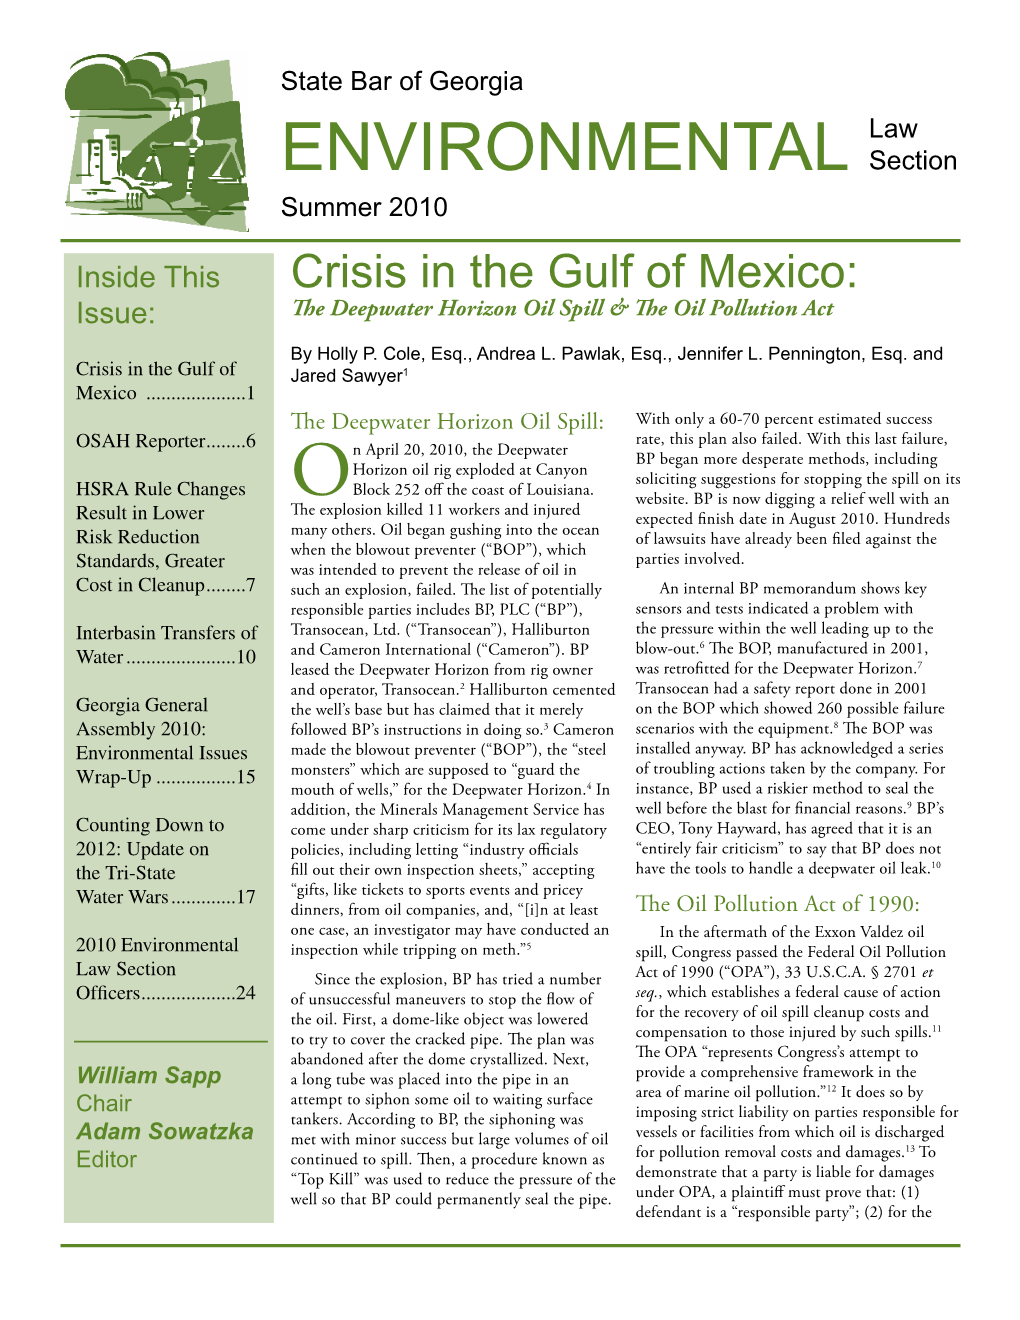 Environmental Section Summer 2010